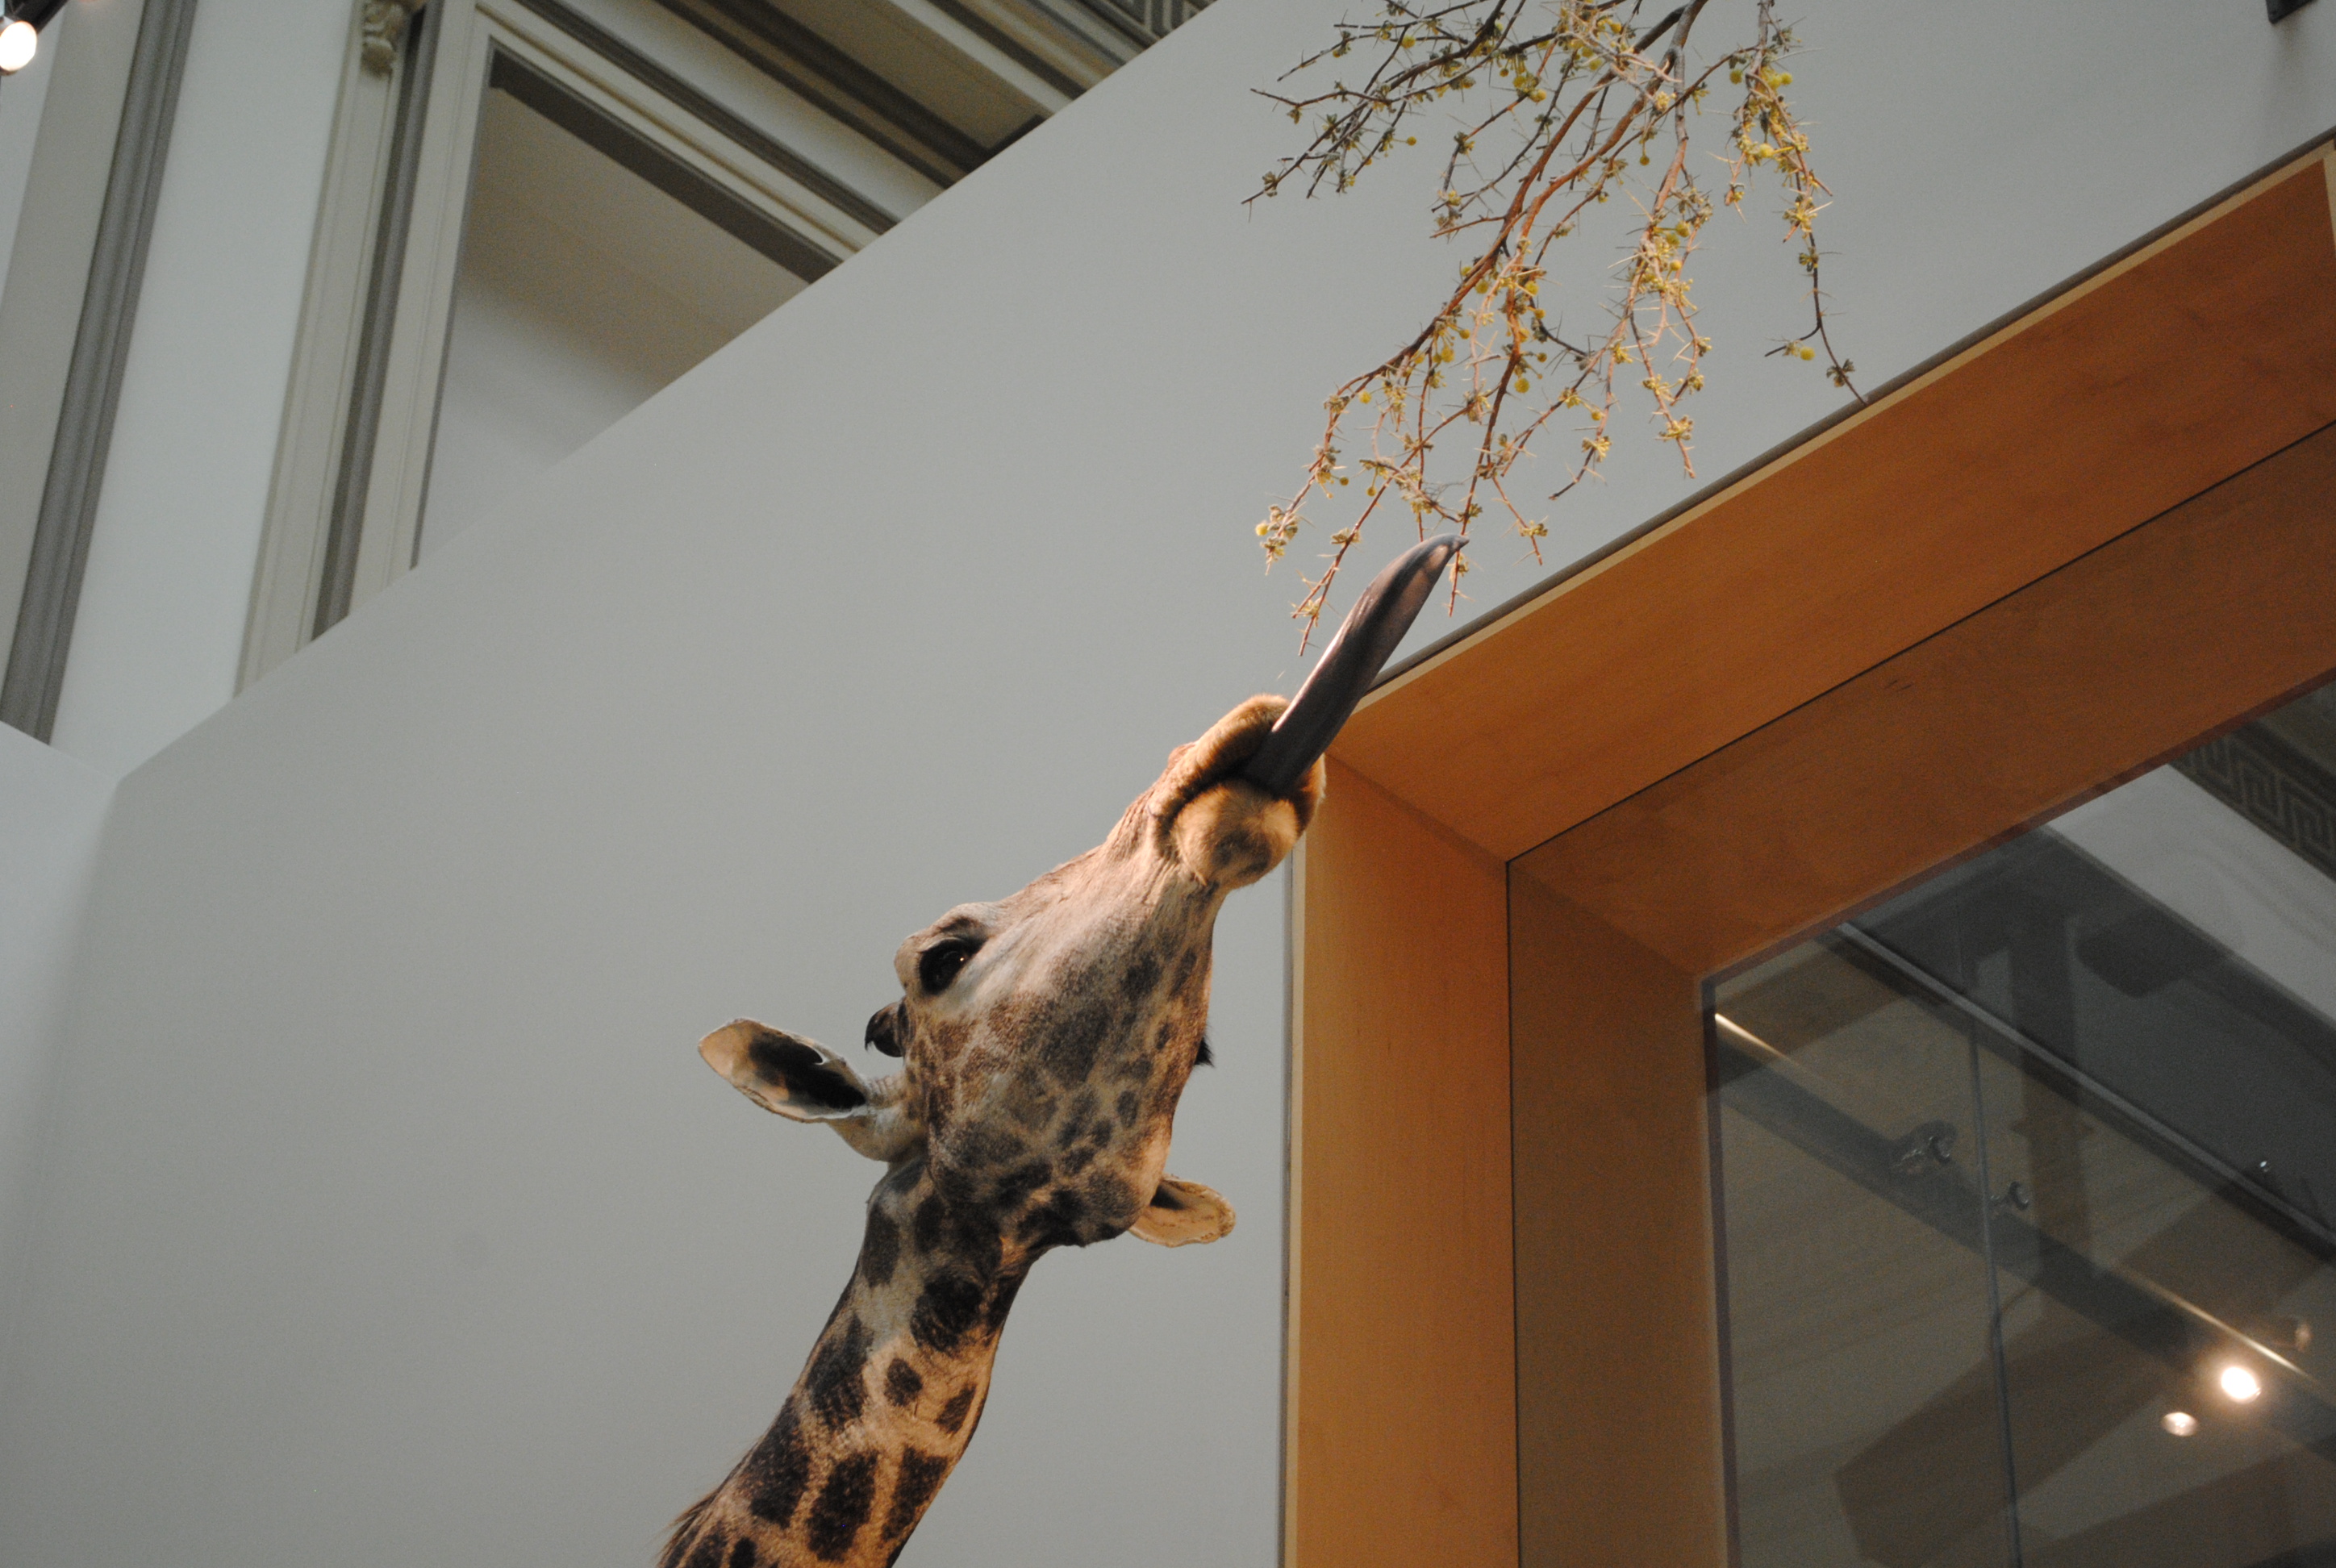 Giraffe in the building photo